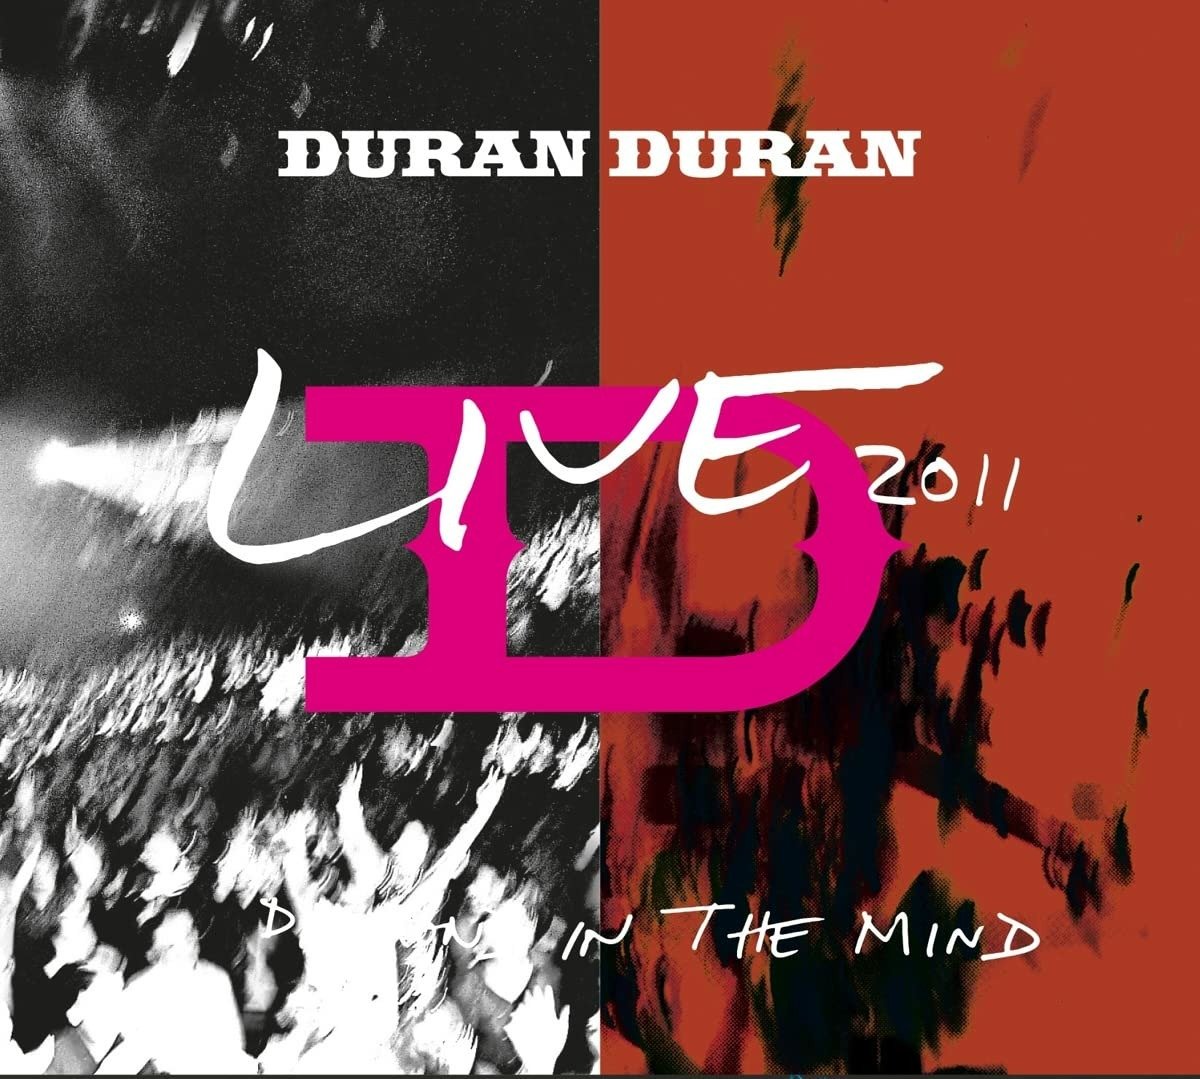 Duran Duran, A Diamond in the Mind: Live 2011 CD, CD